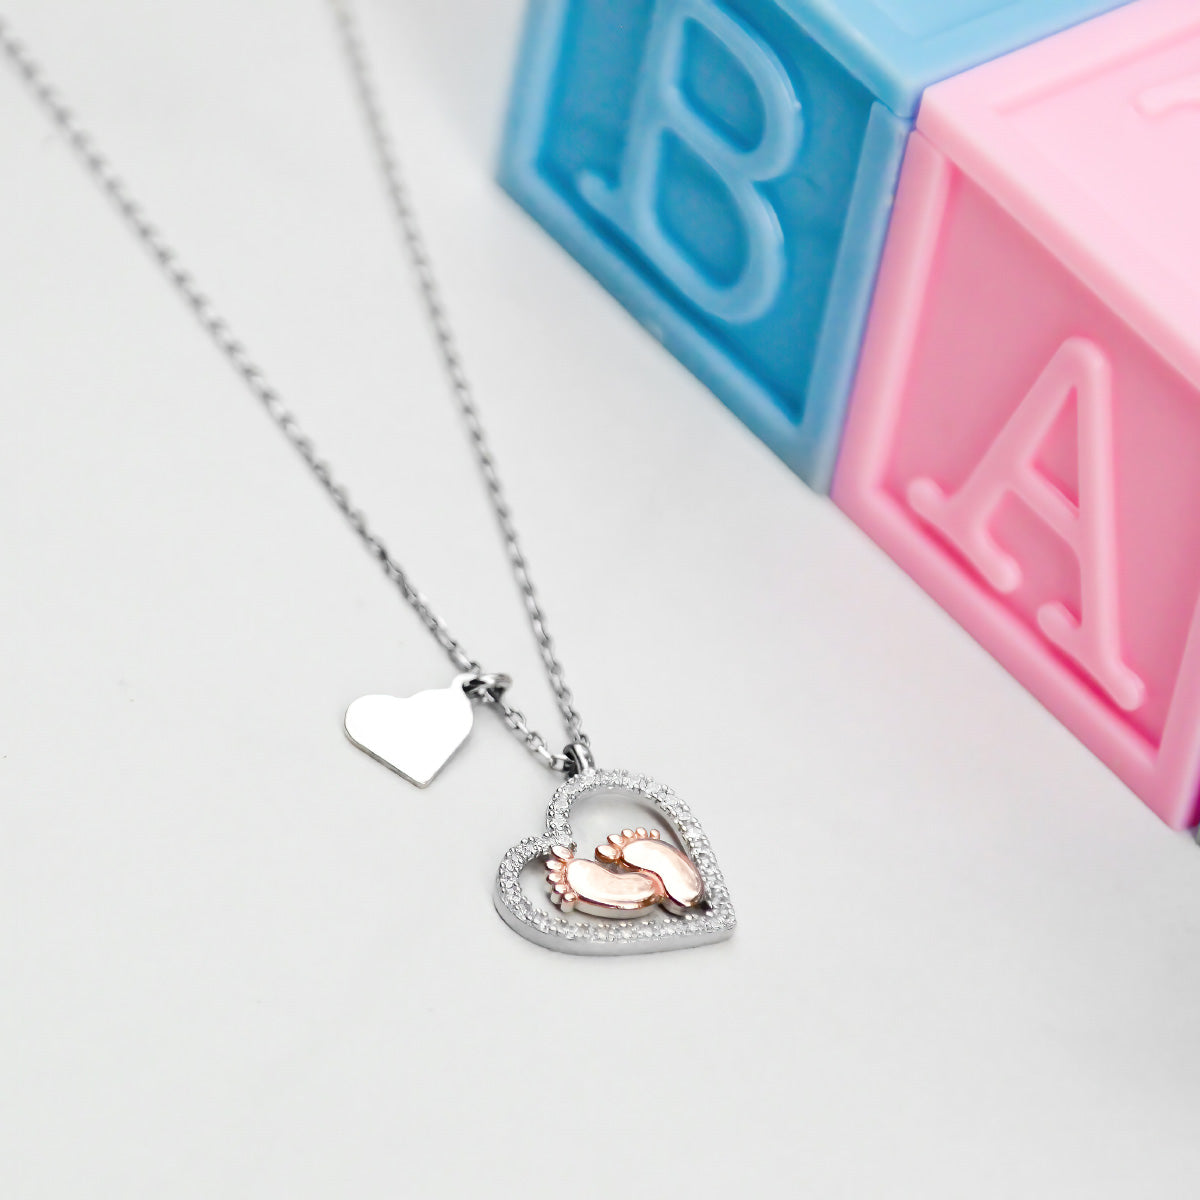 Elephantastic Mommy - Baby Feet Heart Necklace Gift Set